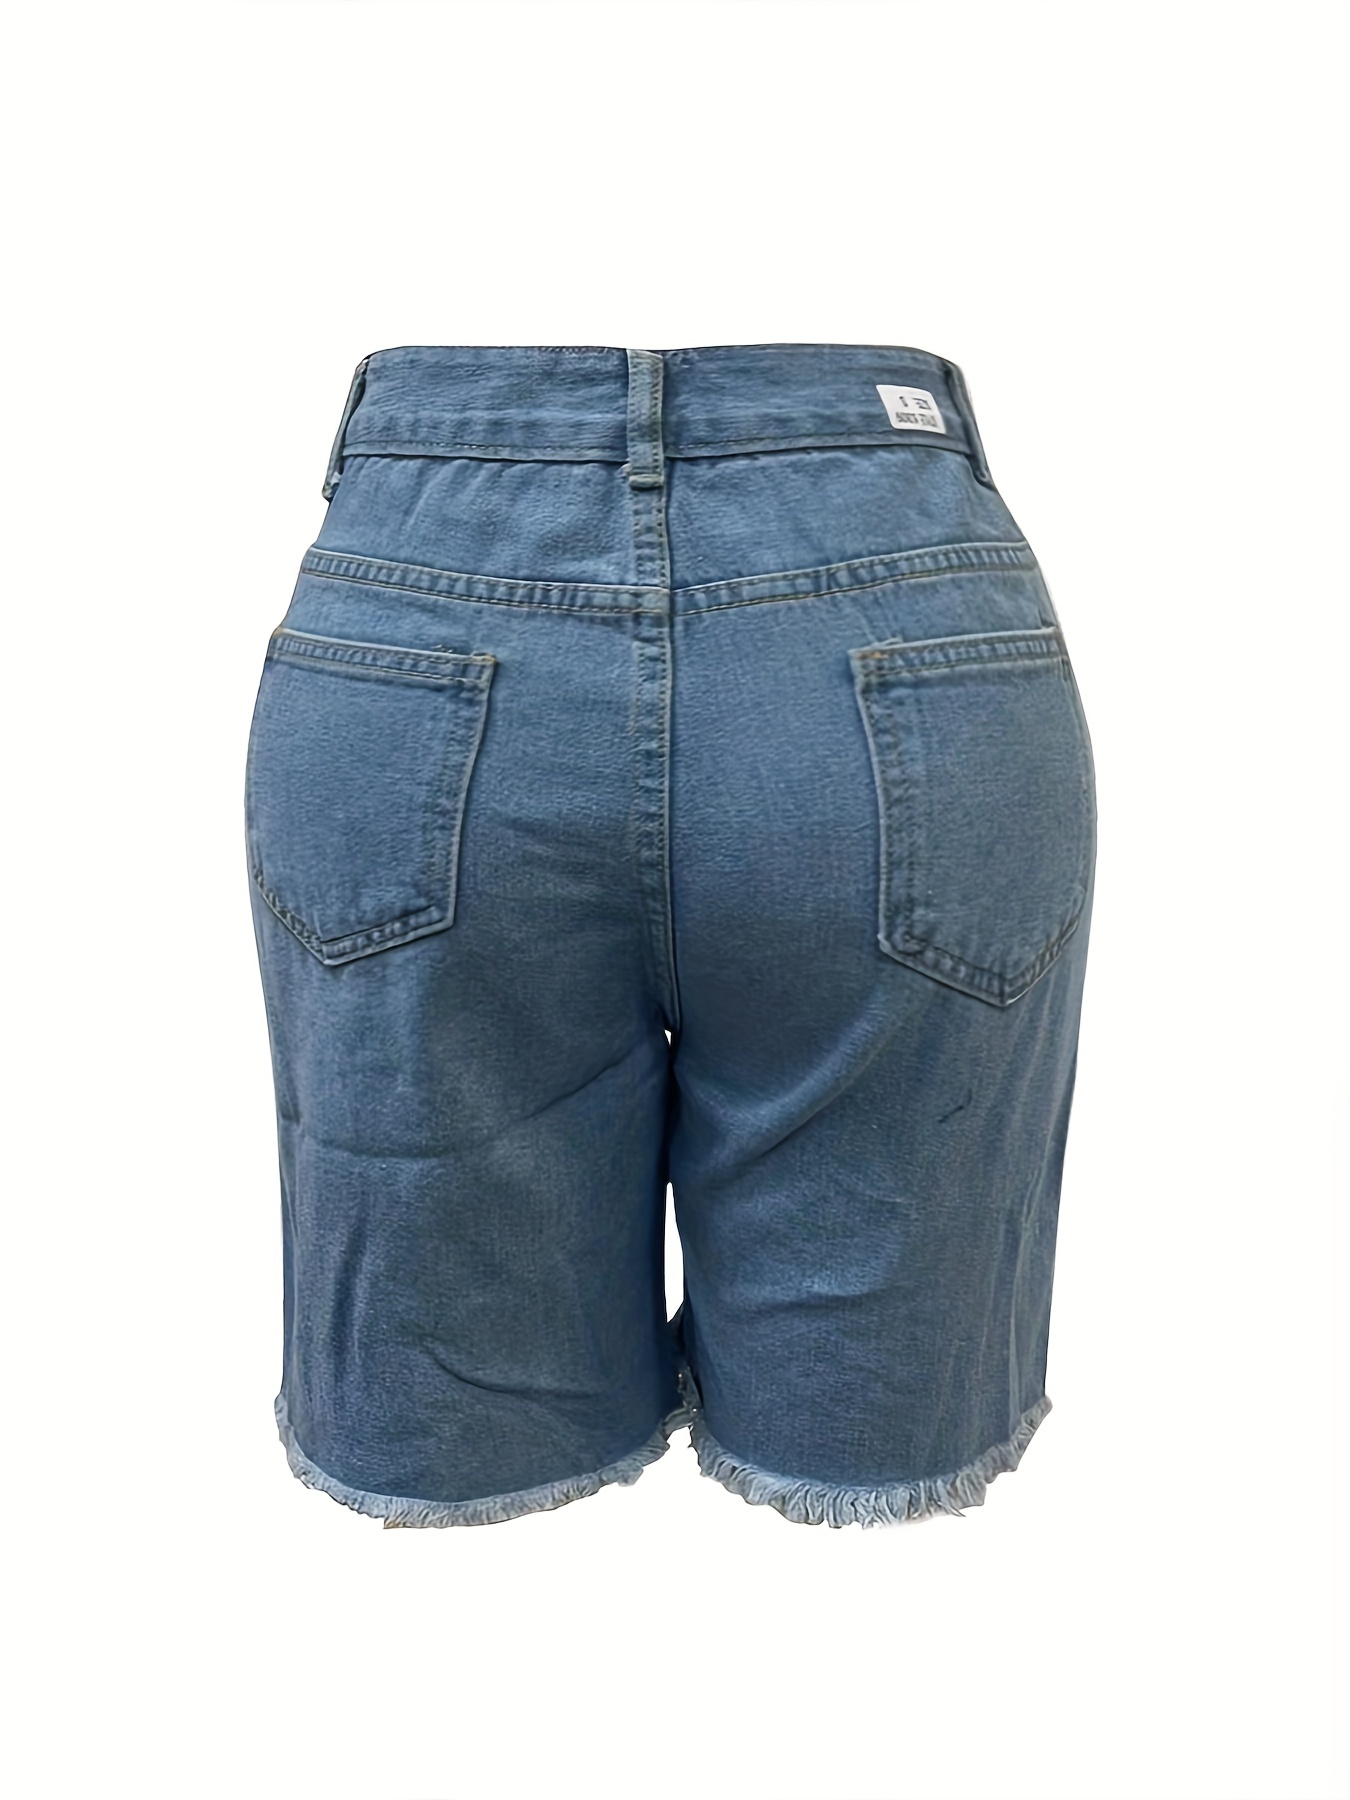 Fashion Women Destroyed Hole Leggings Short Pants Denim Shorts Ripped Jeans